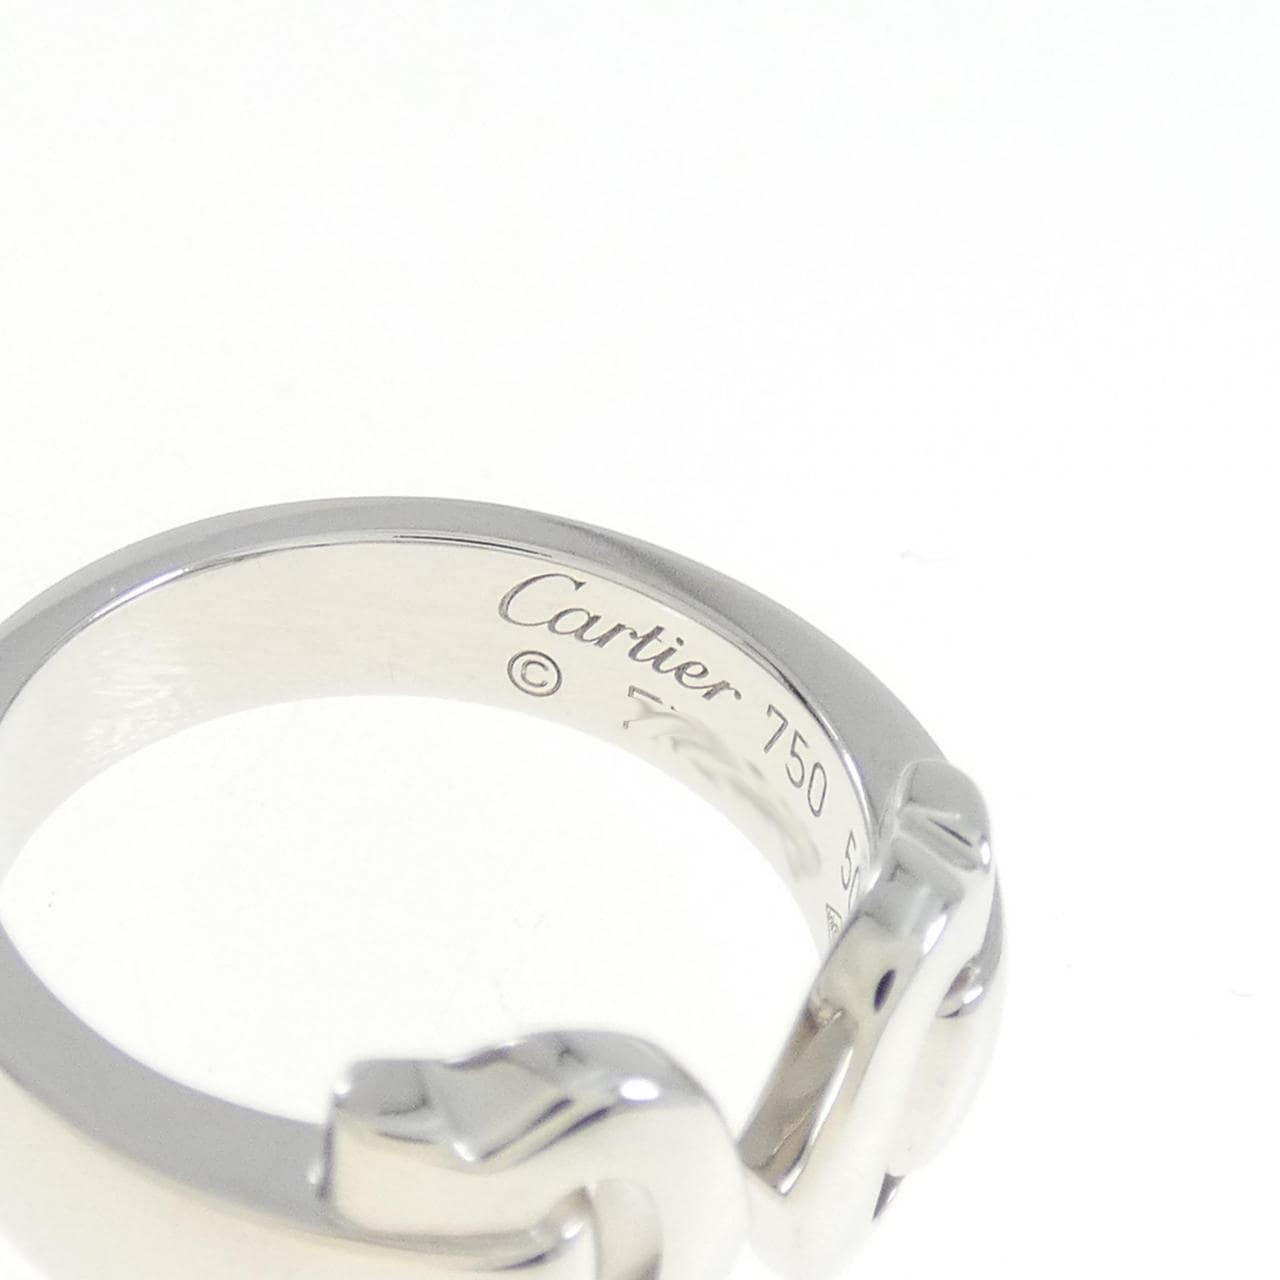 Cartier 2C motif ring